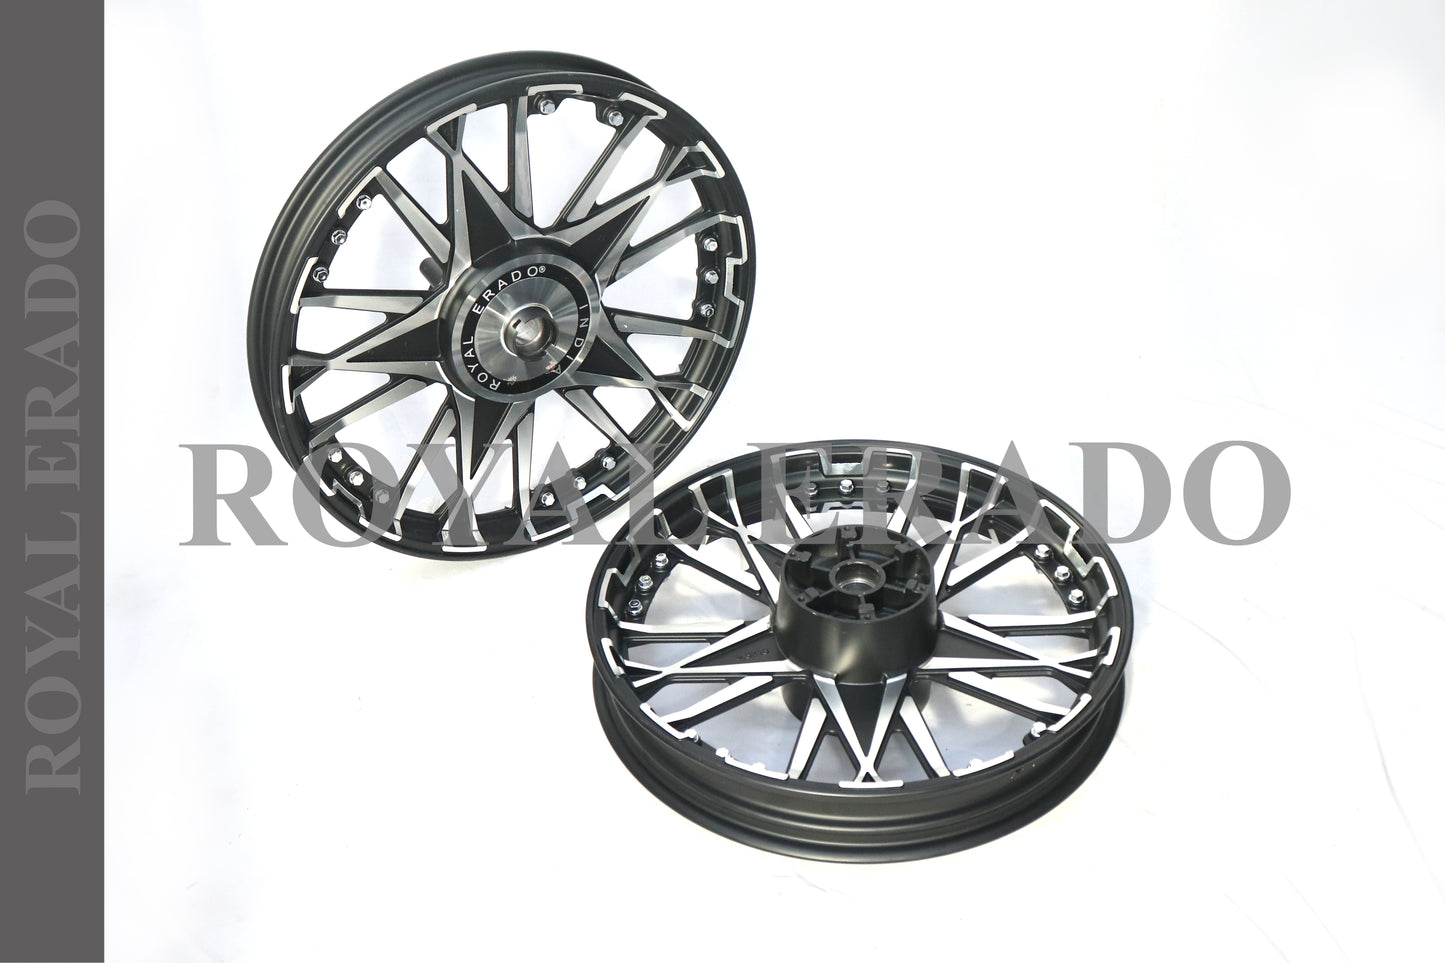 DOUBLE STAR DESIGN Alloy Wheel for STANDARD ABS Royal-Enfield Bullet X 350CC, Electra, Thunderbird 2010 model